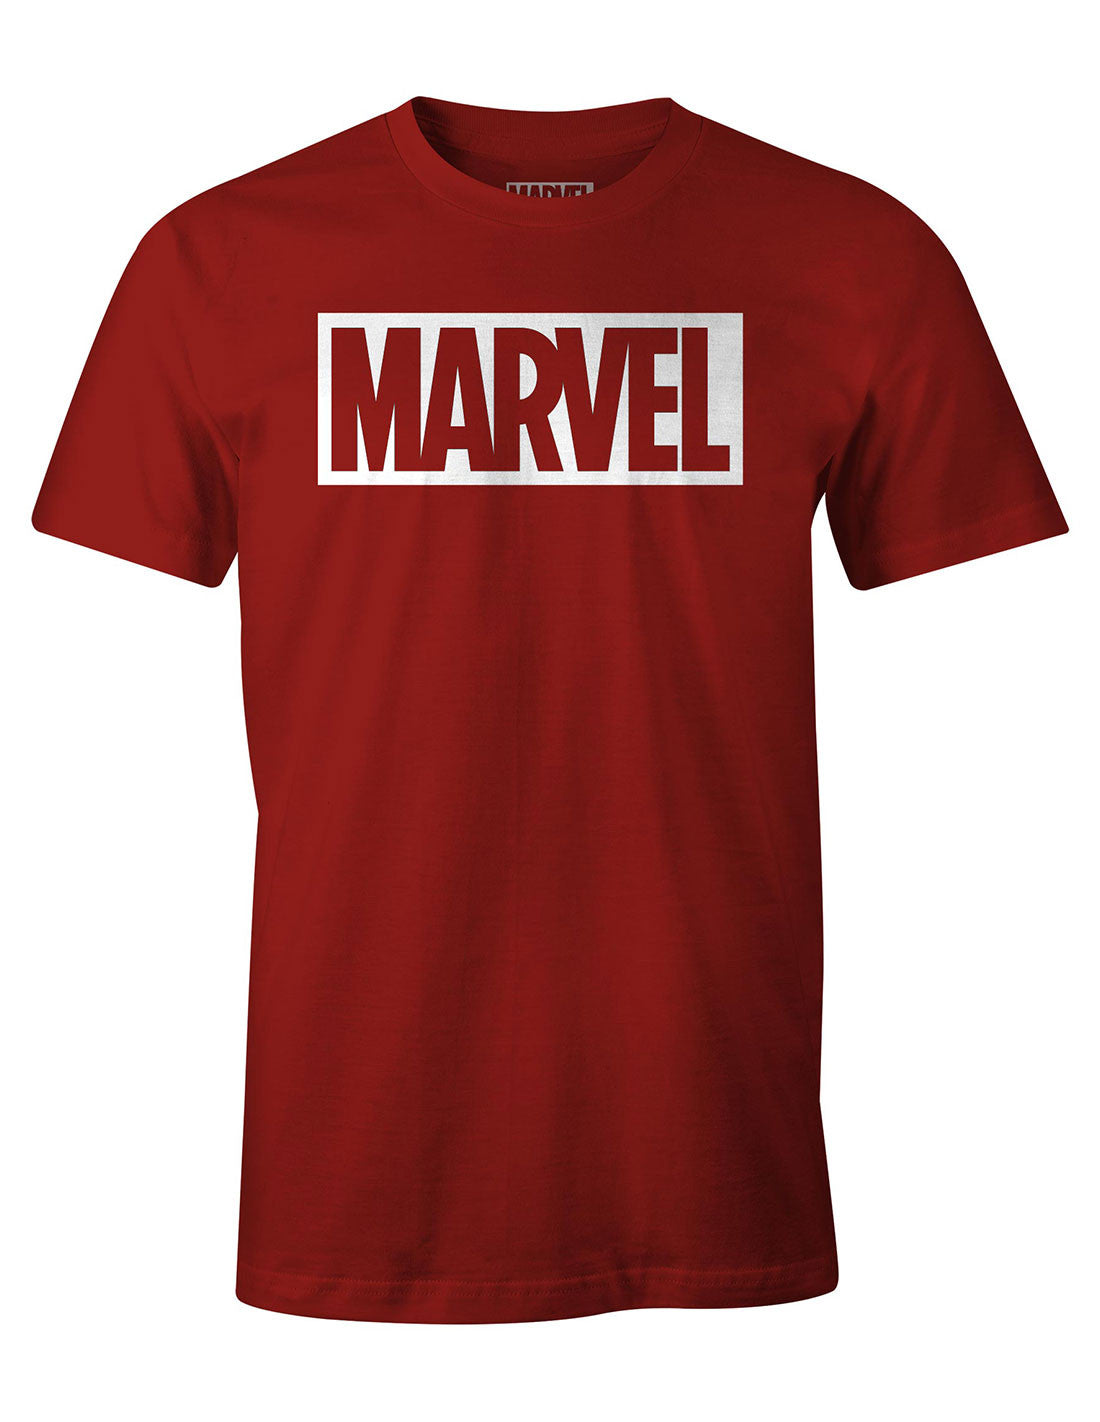 MARVEL T-Shirt - Red Classic Logo